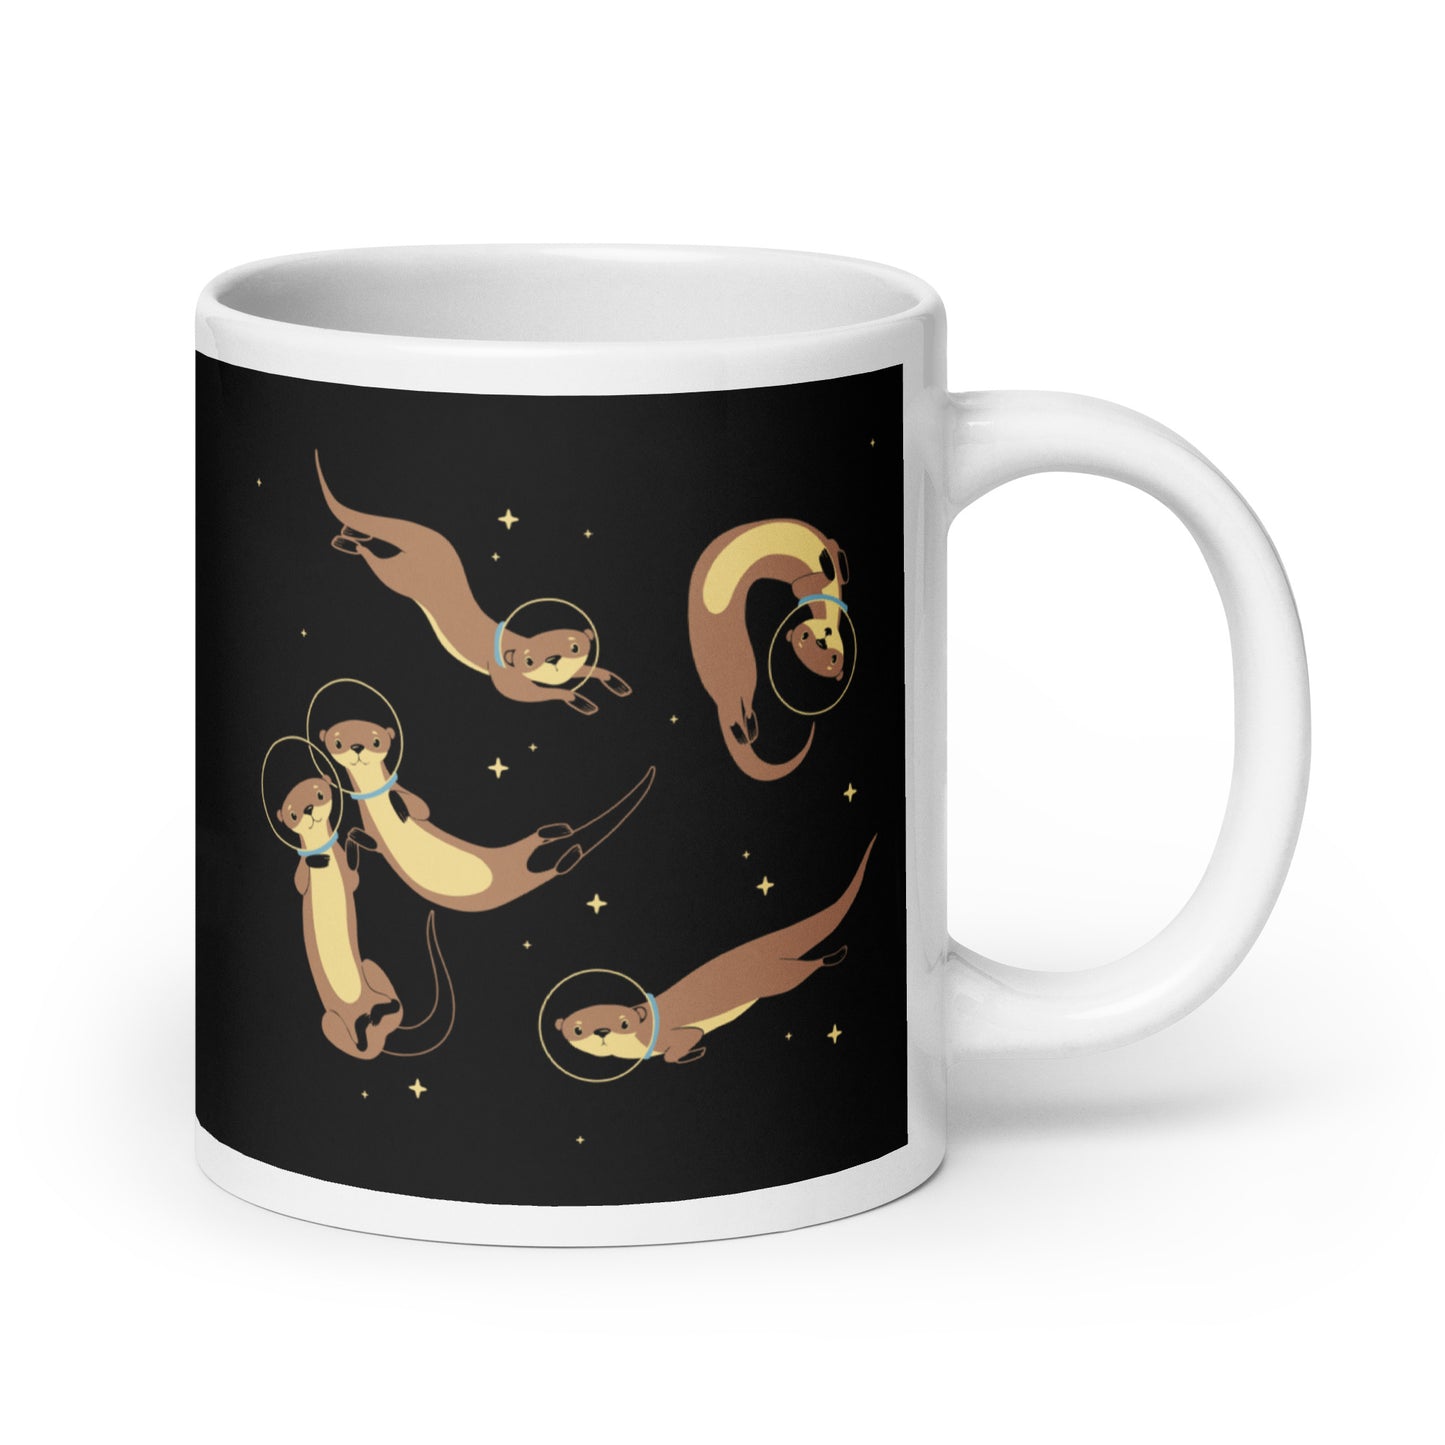 Otter Space Mug